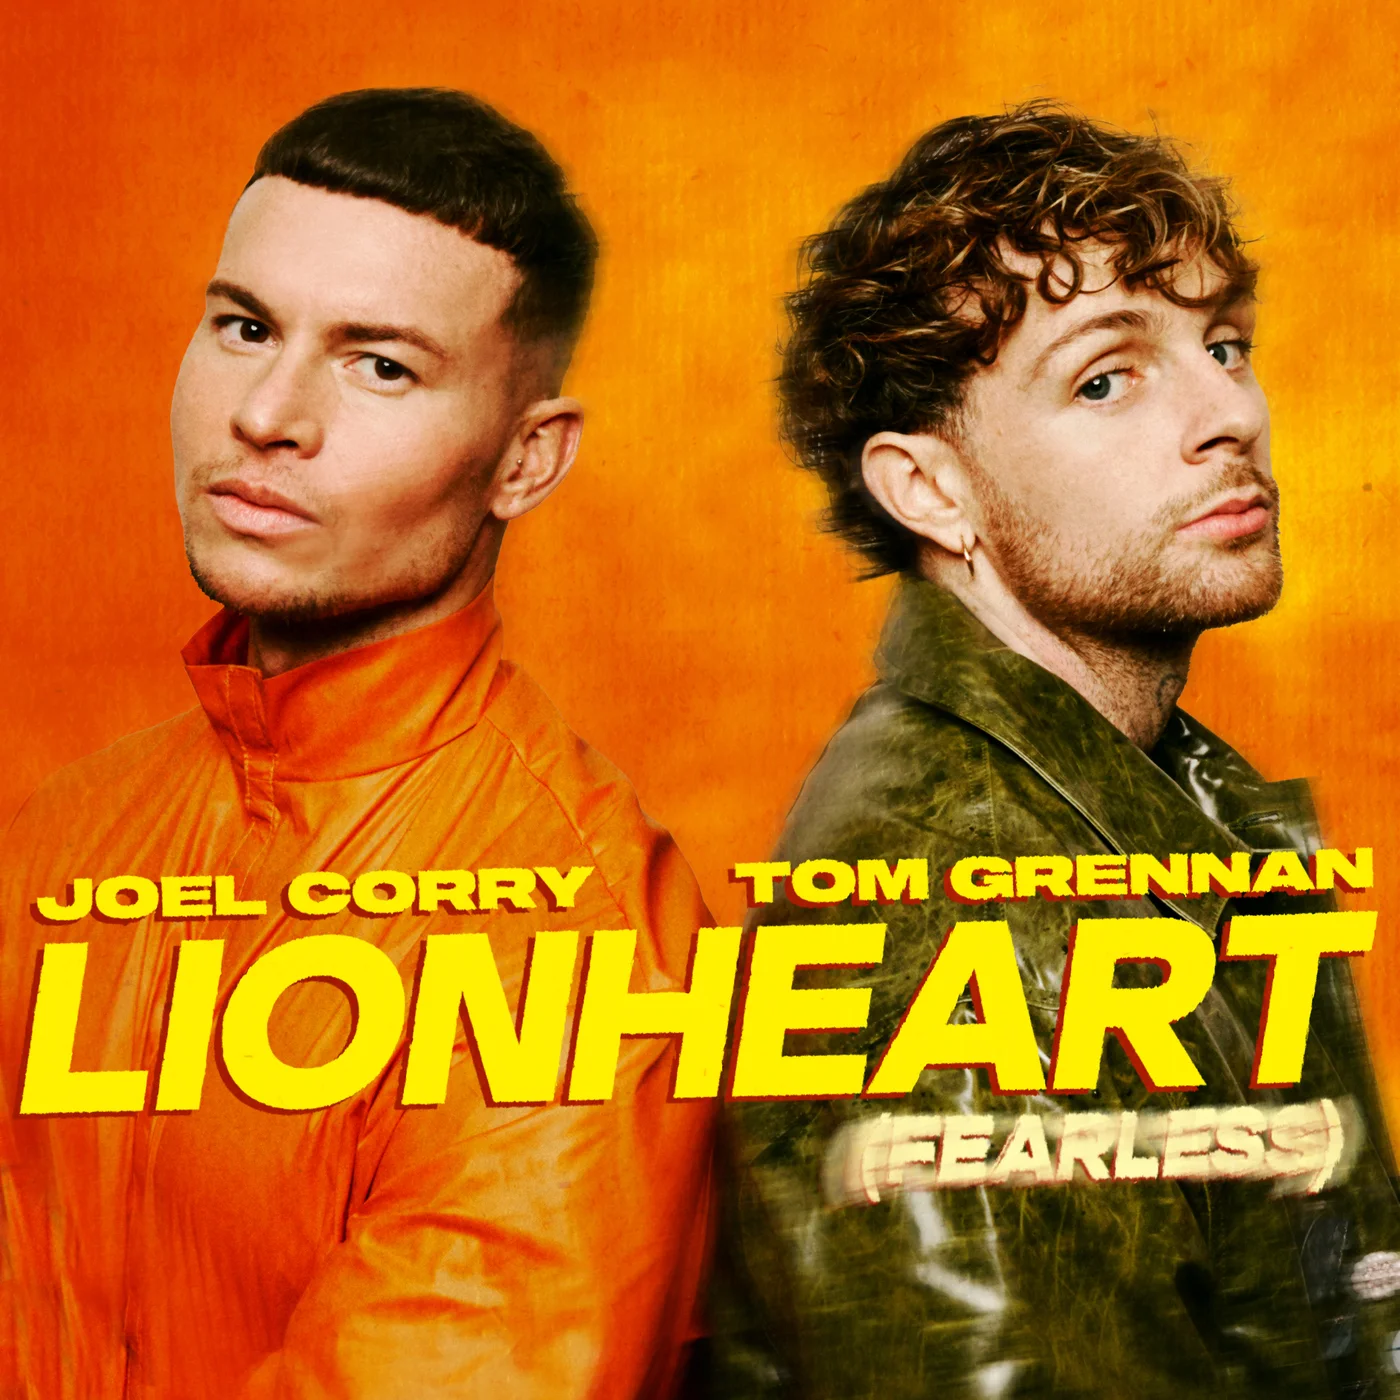 Joel Corry x Tom Grennan - Lionheart (Fearless) (Cedric Gervais Extended Remix)